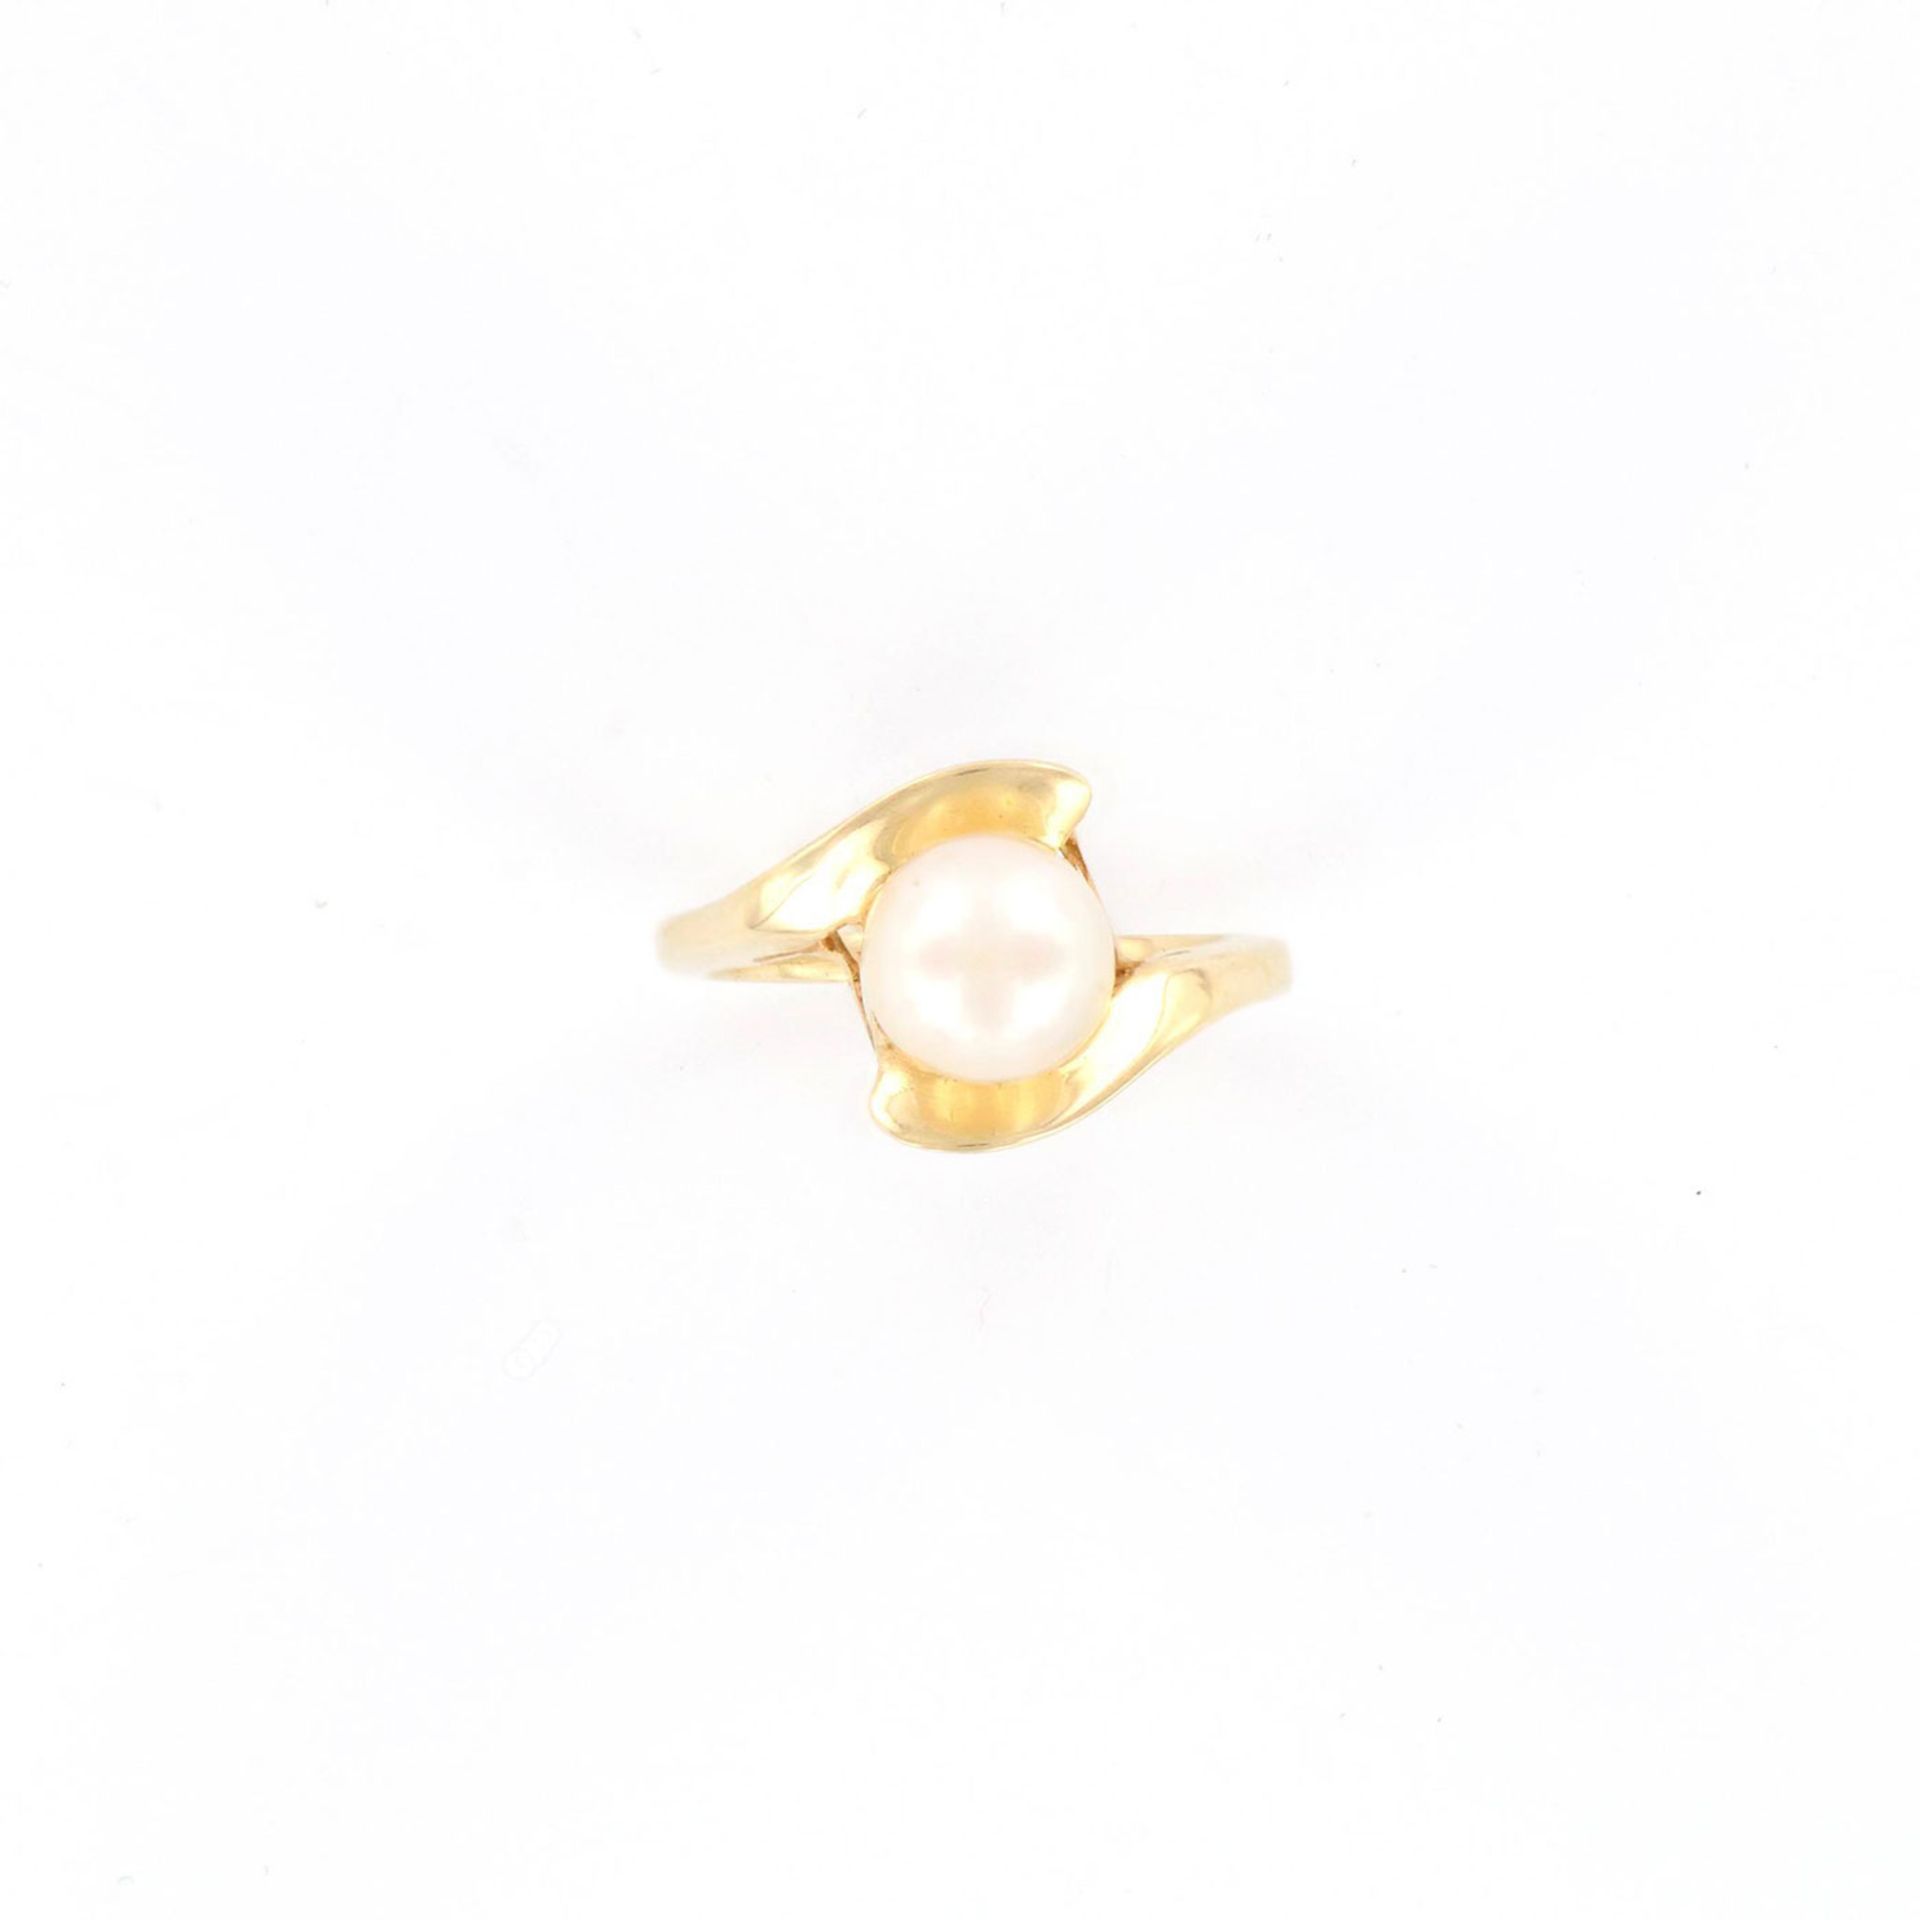 Vintage 14K Gold Pearl Cocktail Ring - Image 3 of 4